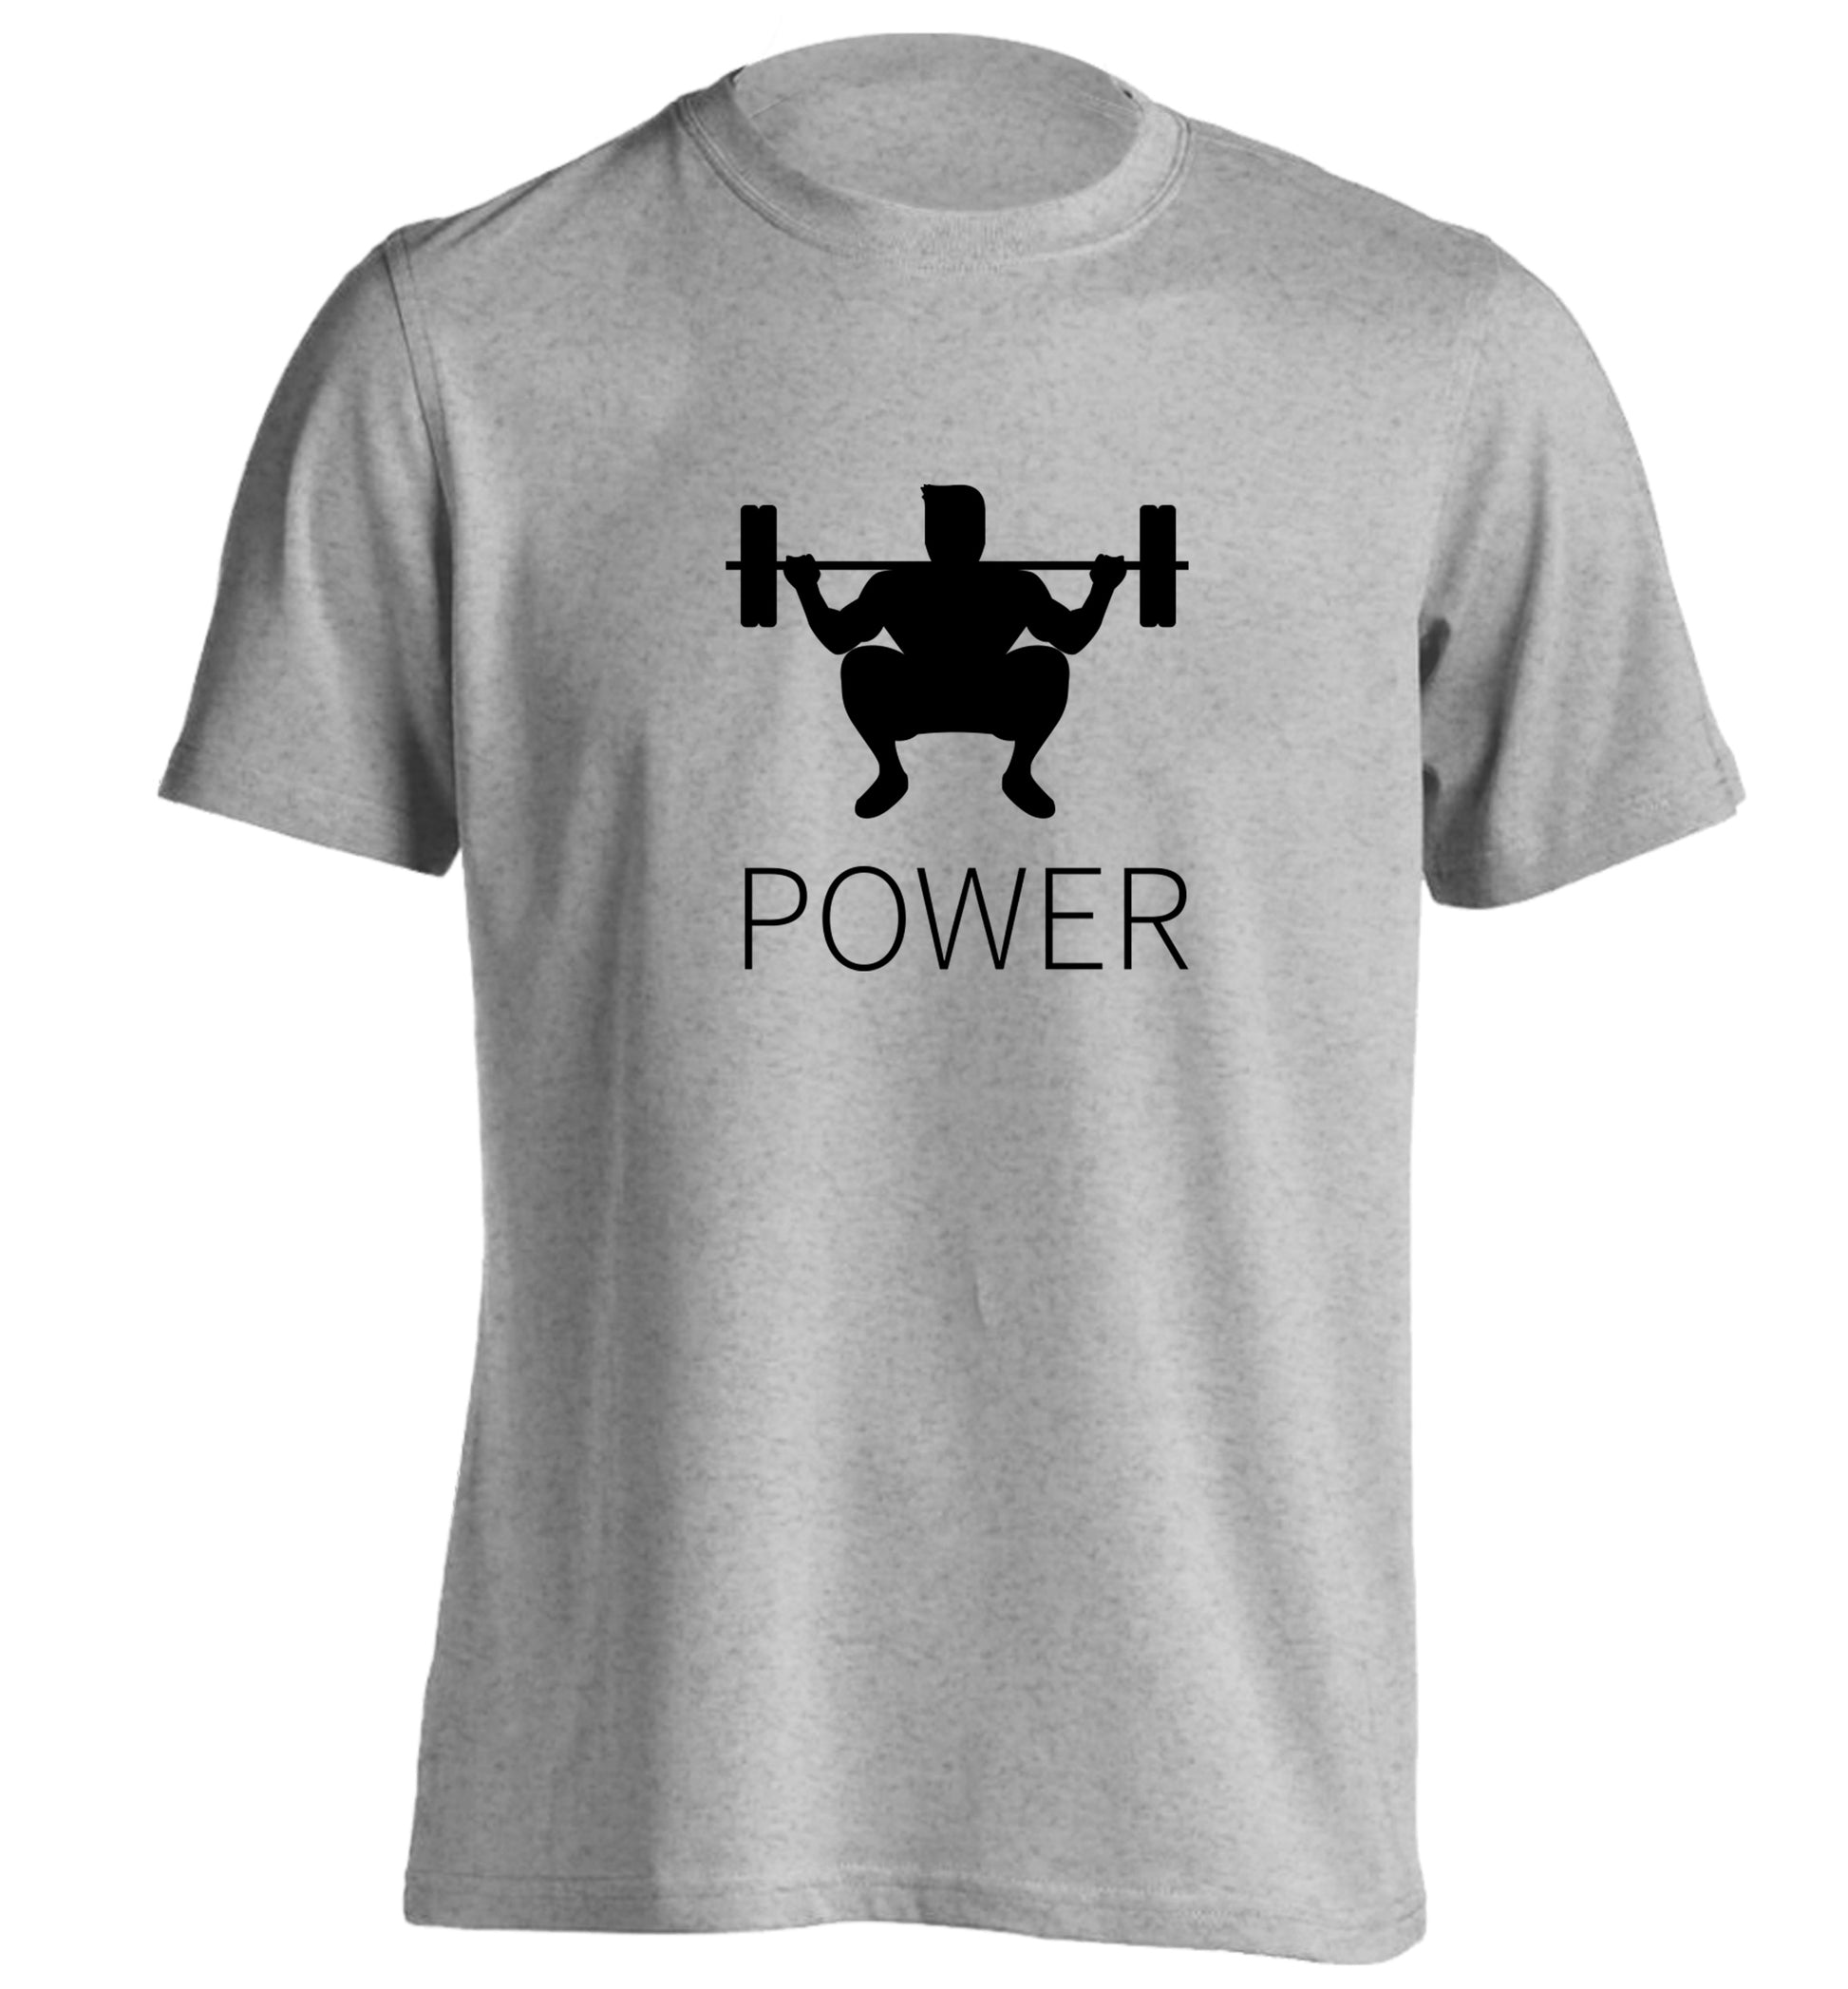 Lift power adults unisex grey Tshirt 2XL